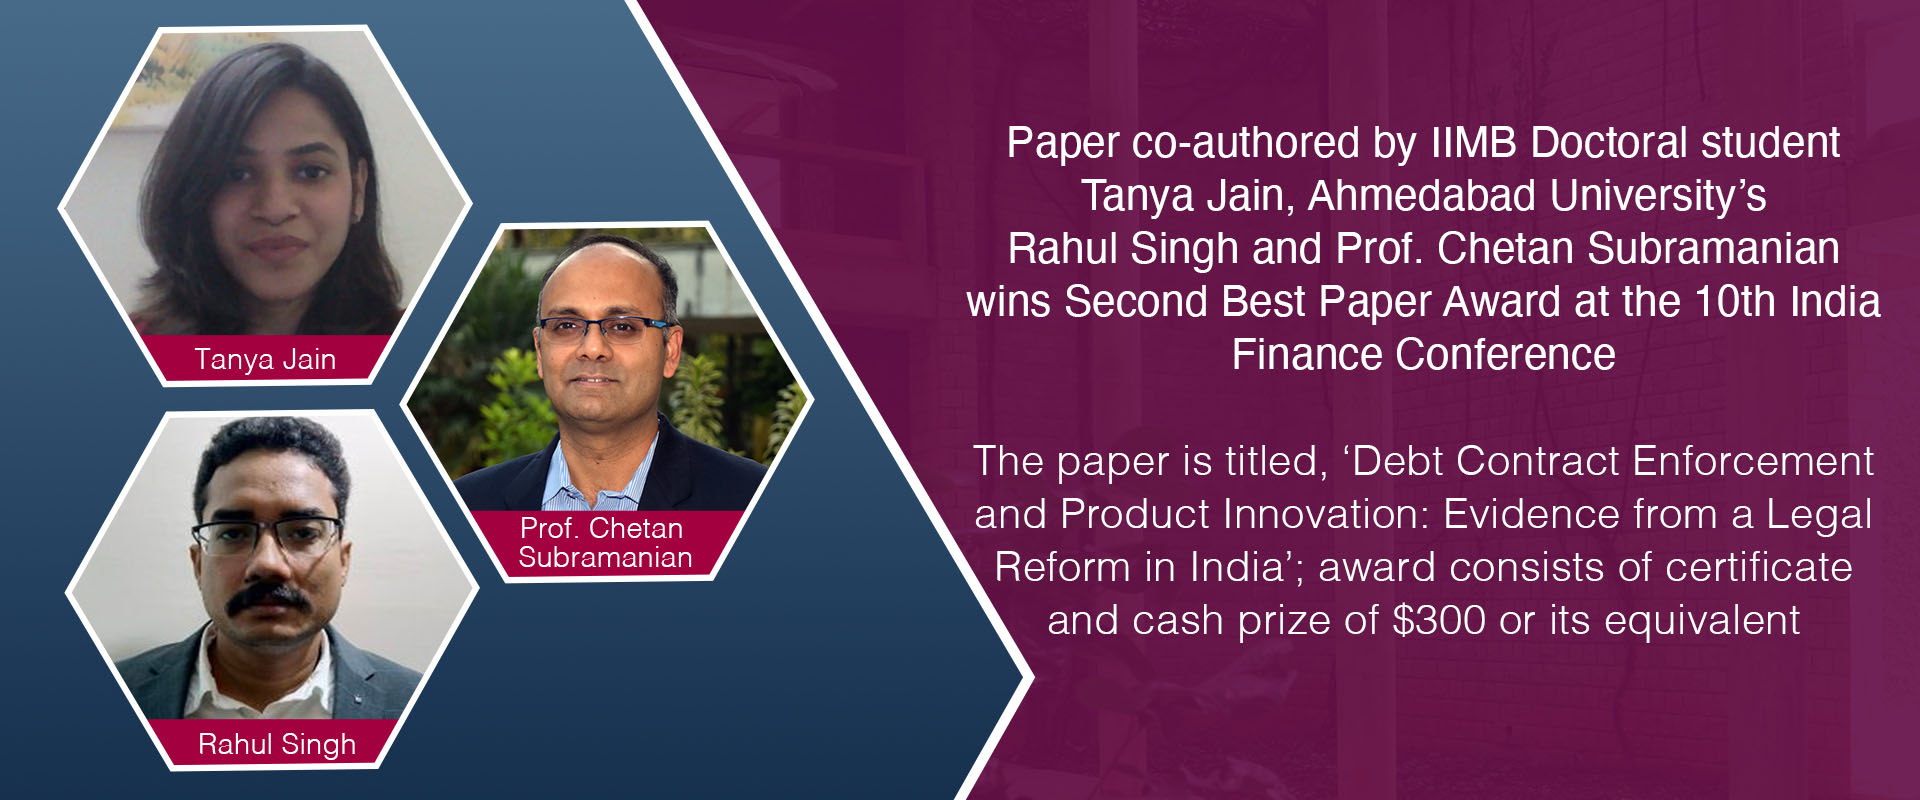 Tanya Jain, Ahmedabad University’s Rahul Singh and Prof. Chetan Subramanian wins Second Best Paper Award at the 10th India Finance Conference